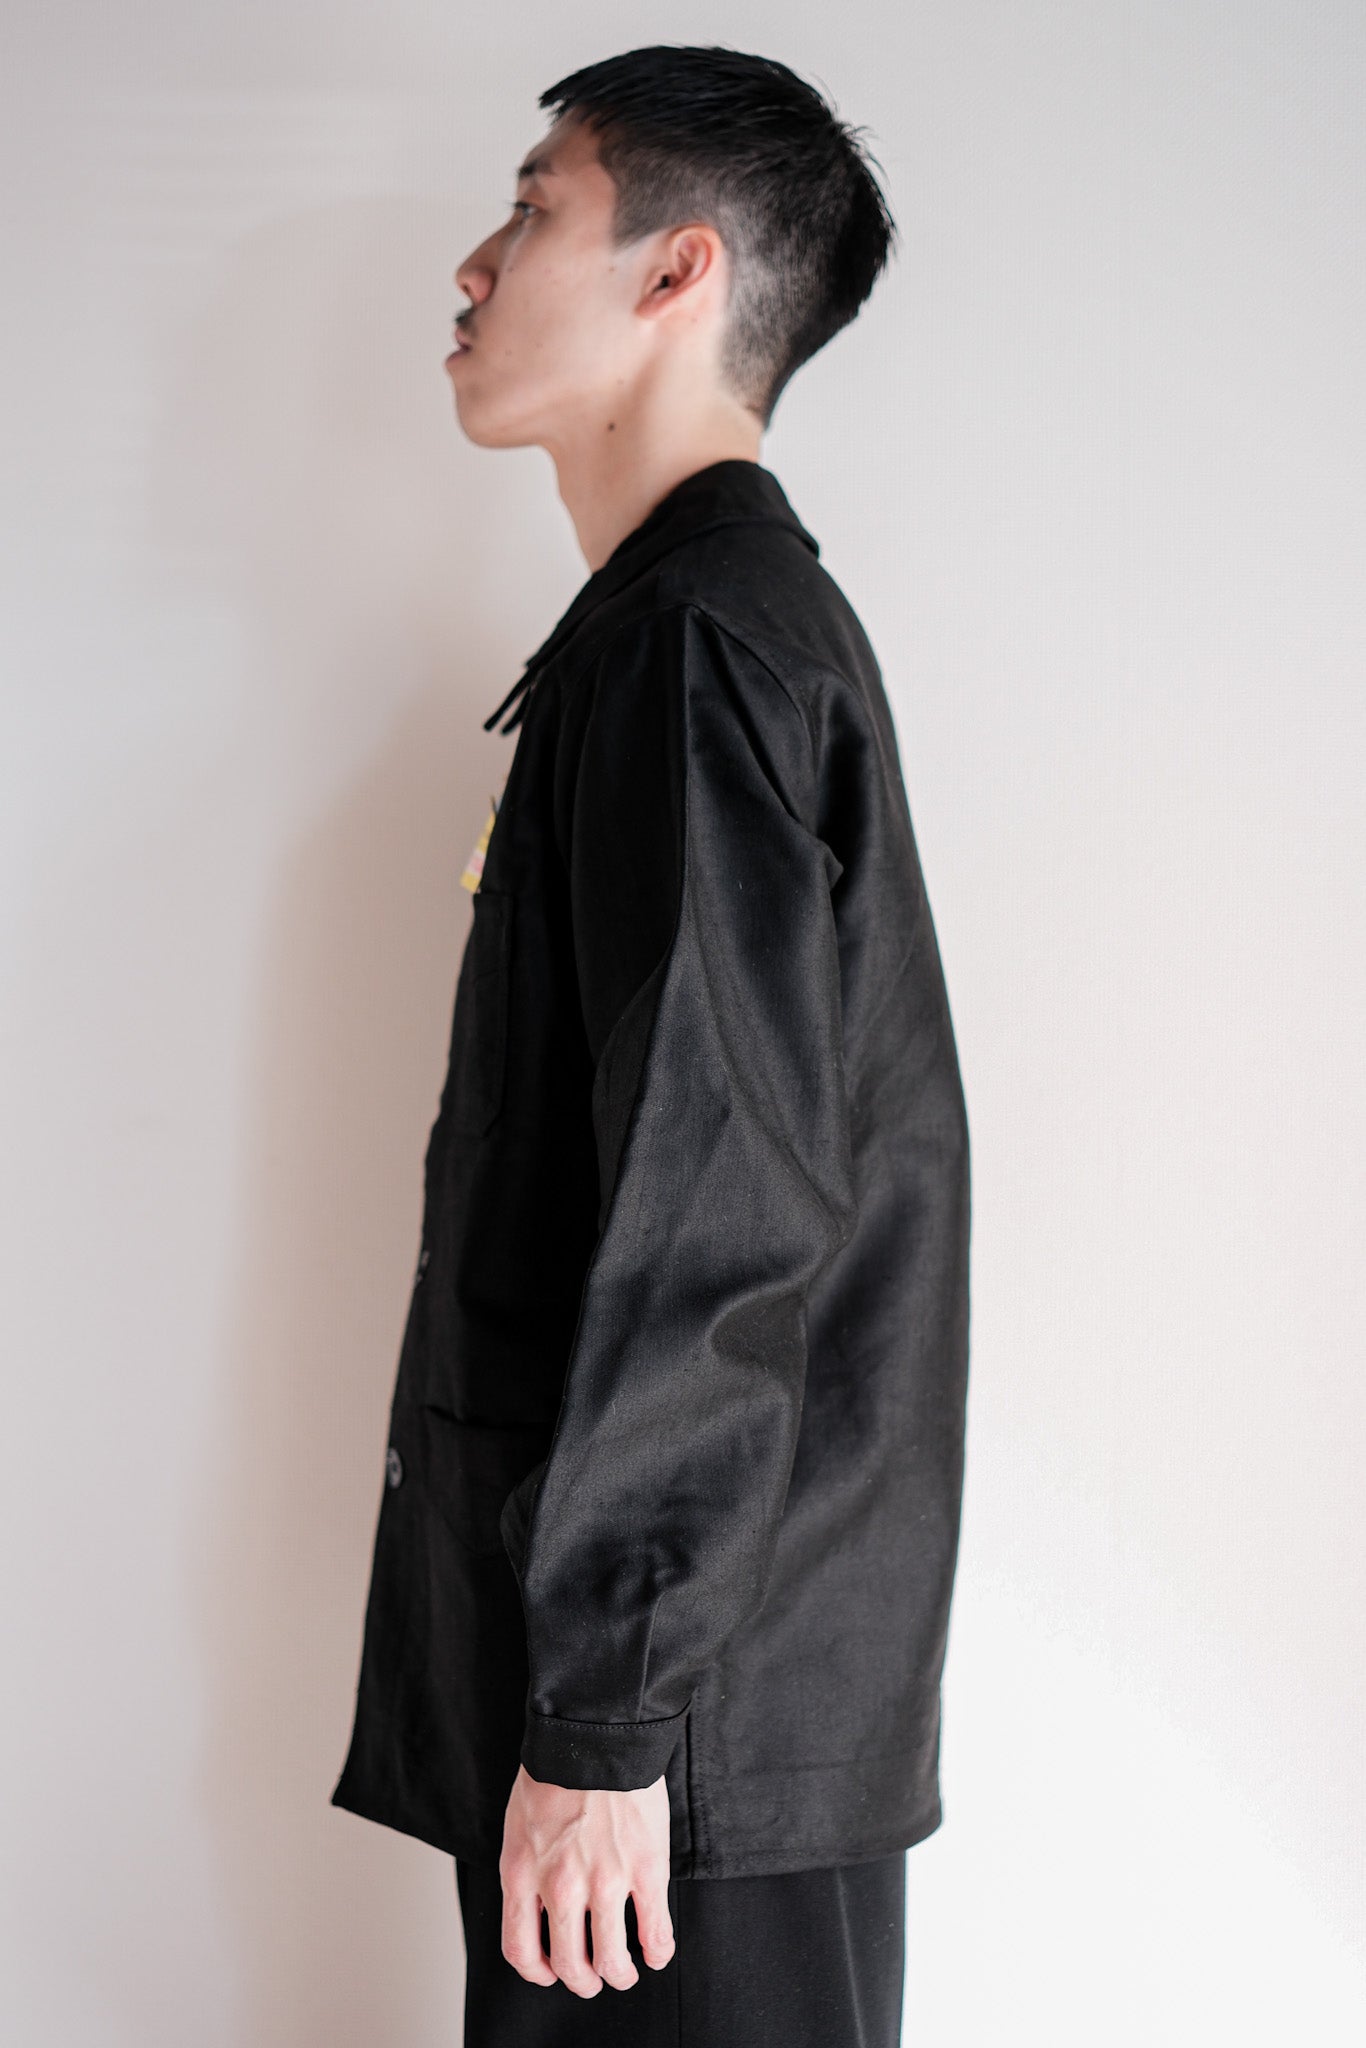 [~ 50's] French Vintage Black Moleskin Work Jacket Size.42 "Le Mont St. Michel" "DEAD STOCK"